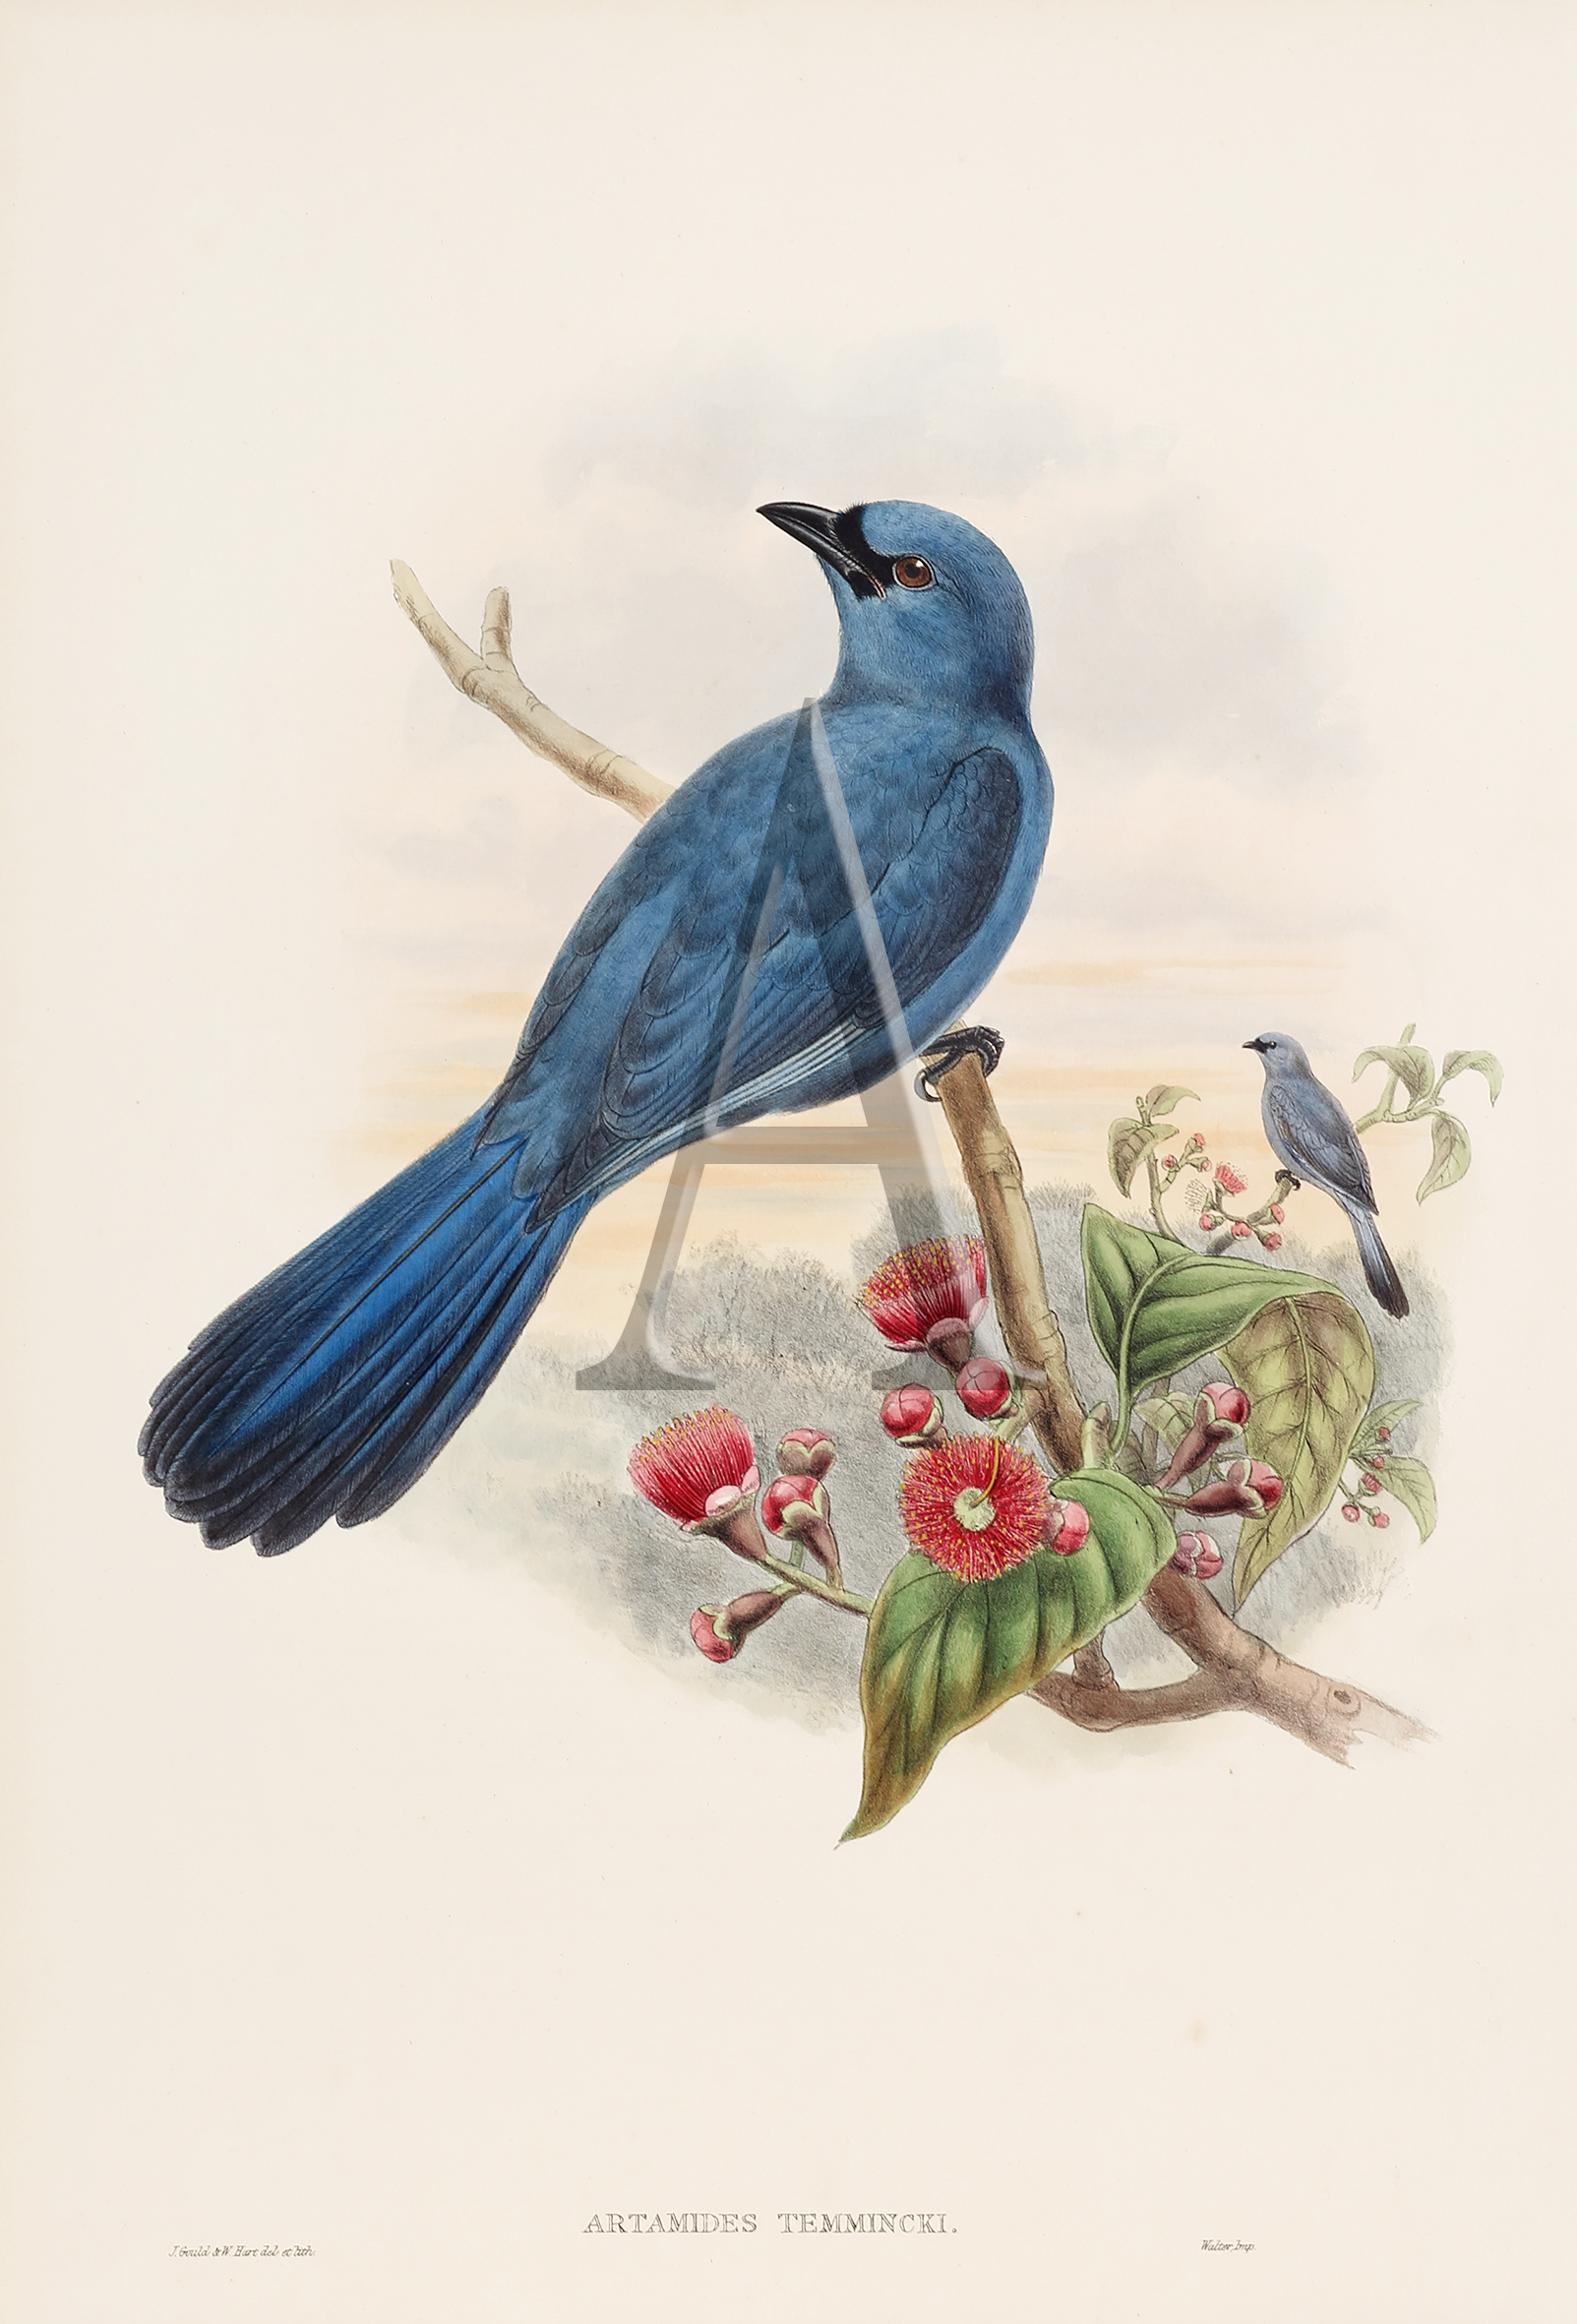 Artamides temmincki. Blue cuckoo-shrike. - Antique Print from 1875